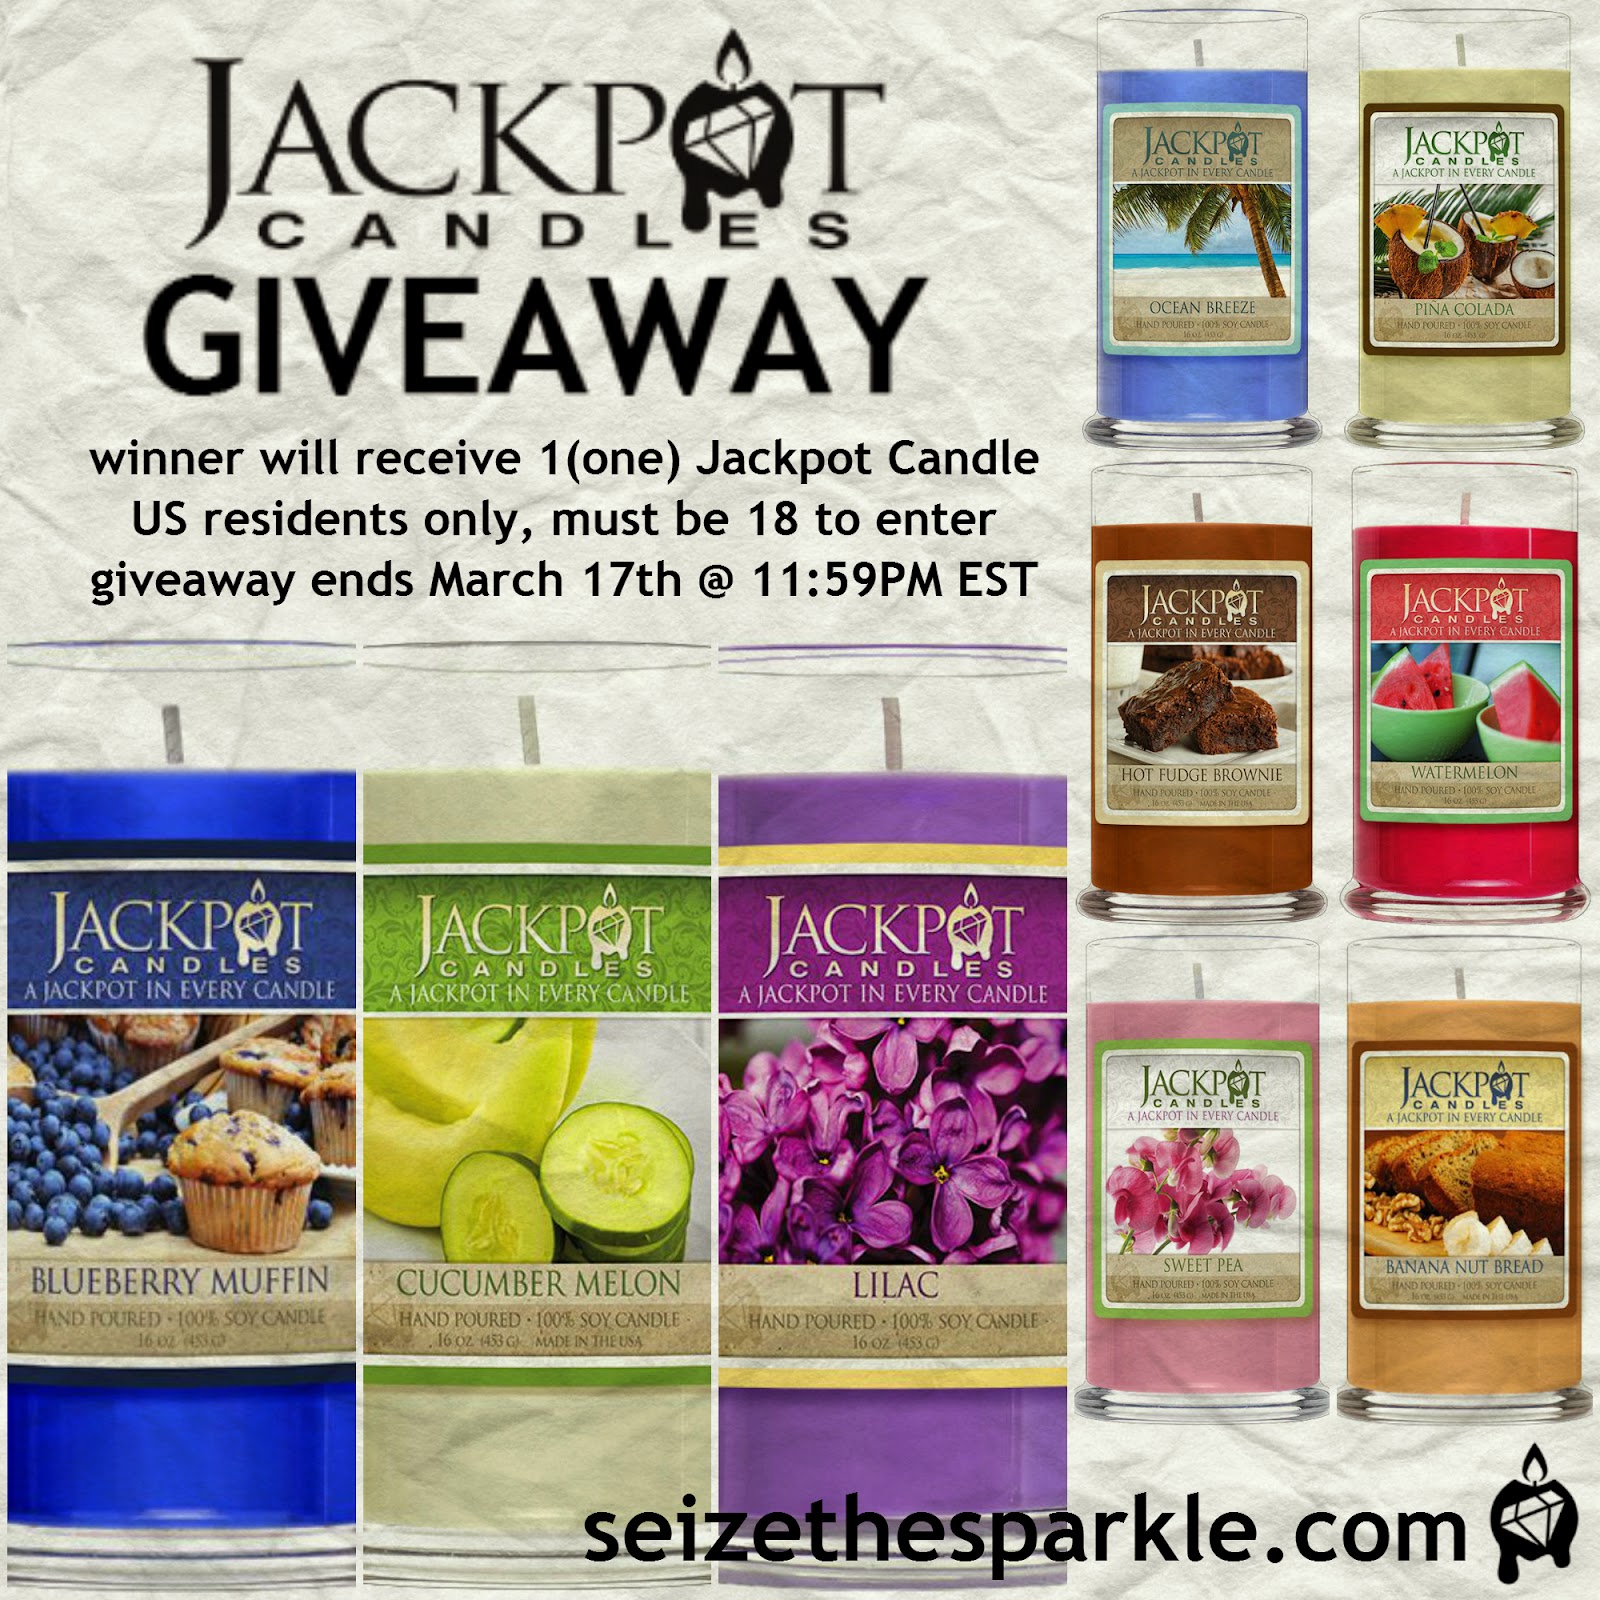 http://www.seizethesparkle.com/2015/03/jackpot-candles-review-giveaway.html